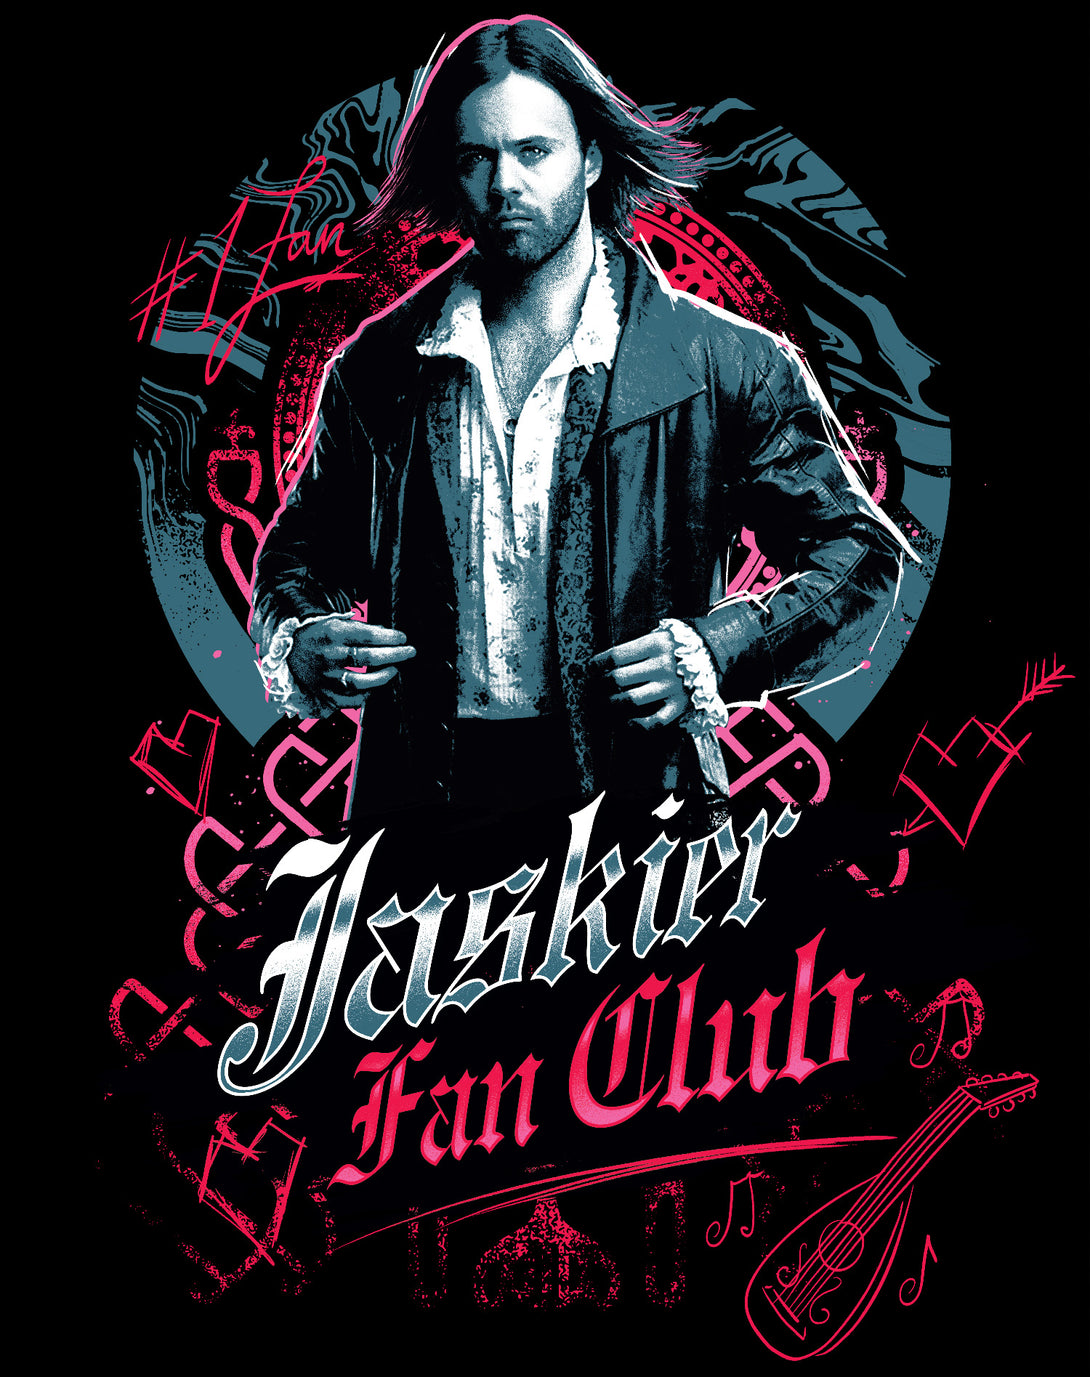 The Witcher Jaskier Splash Fan Club Official Men's T-Shirt Black - Urban Species Design Close Up